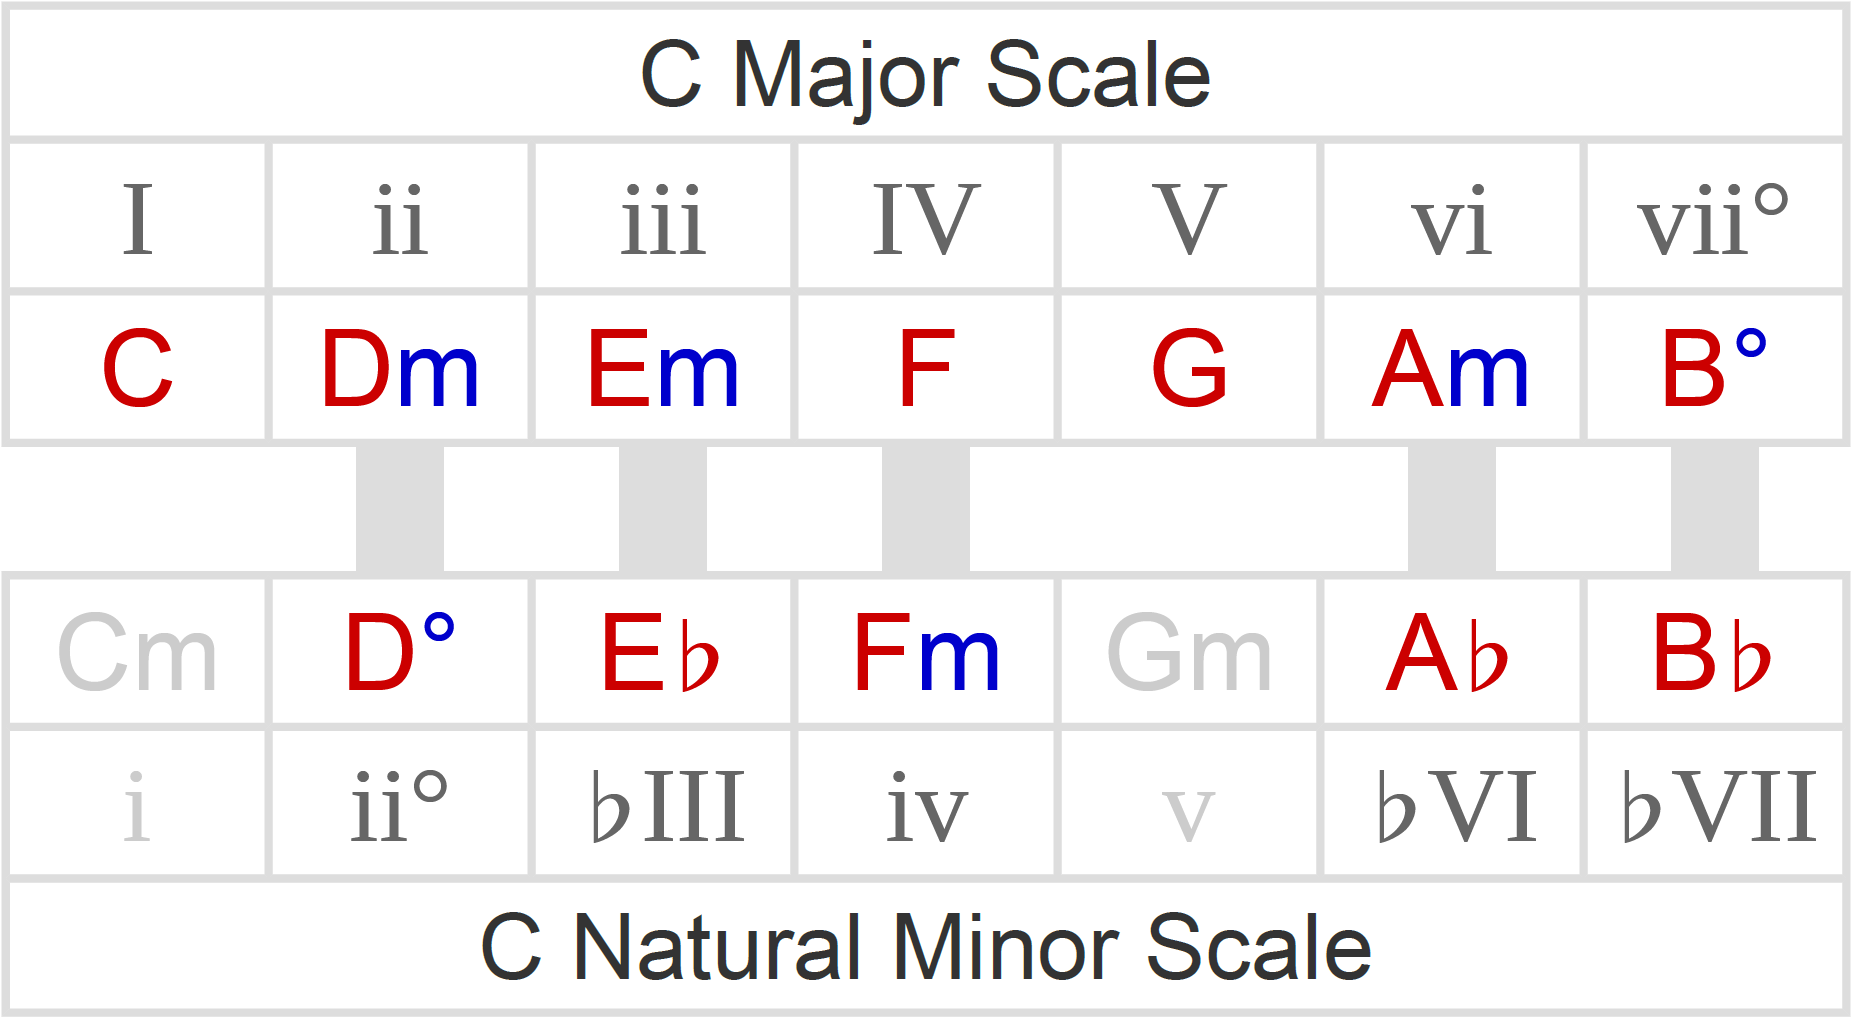 The key of B flat major, Chords